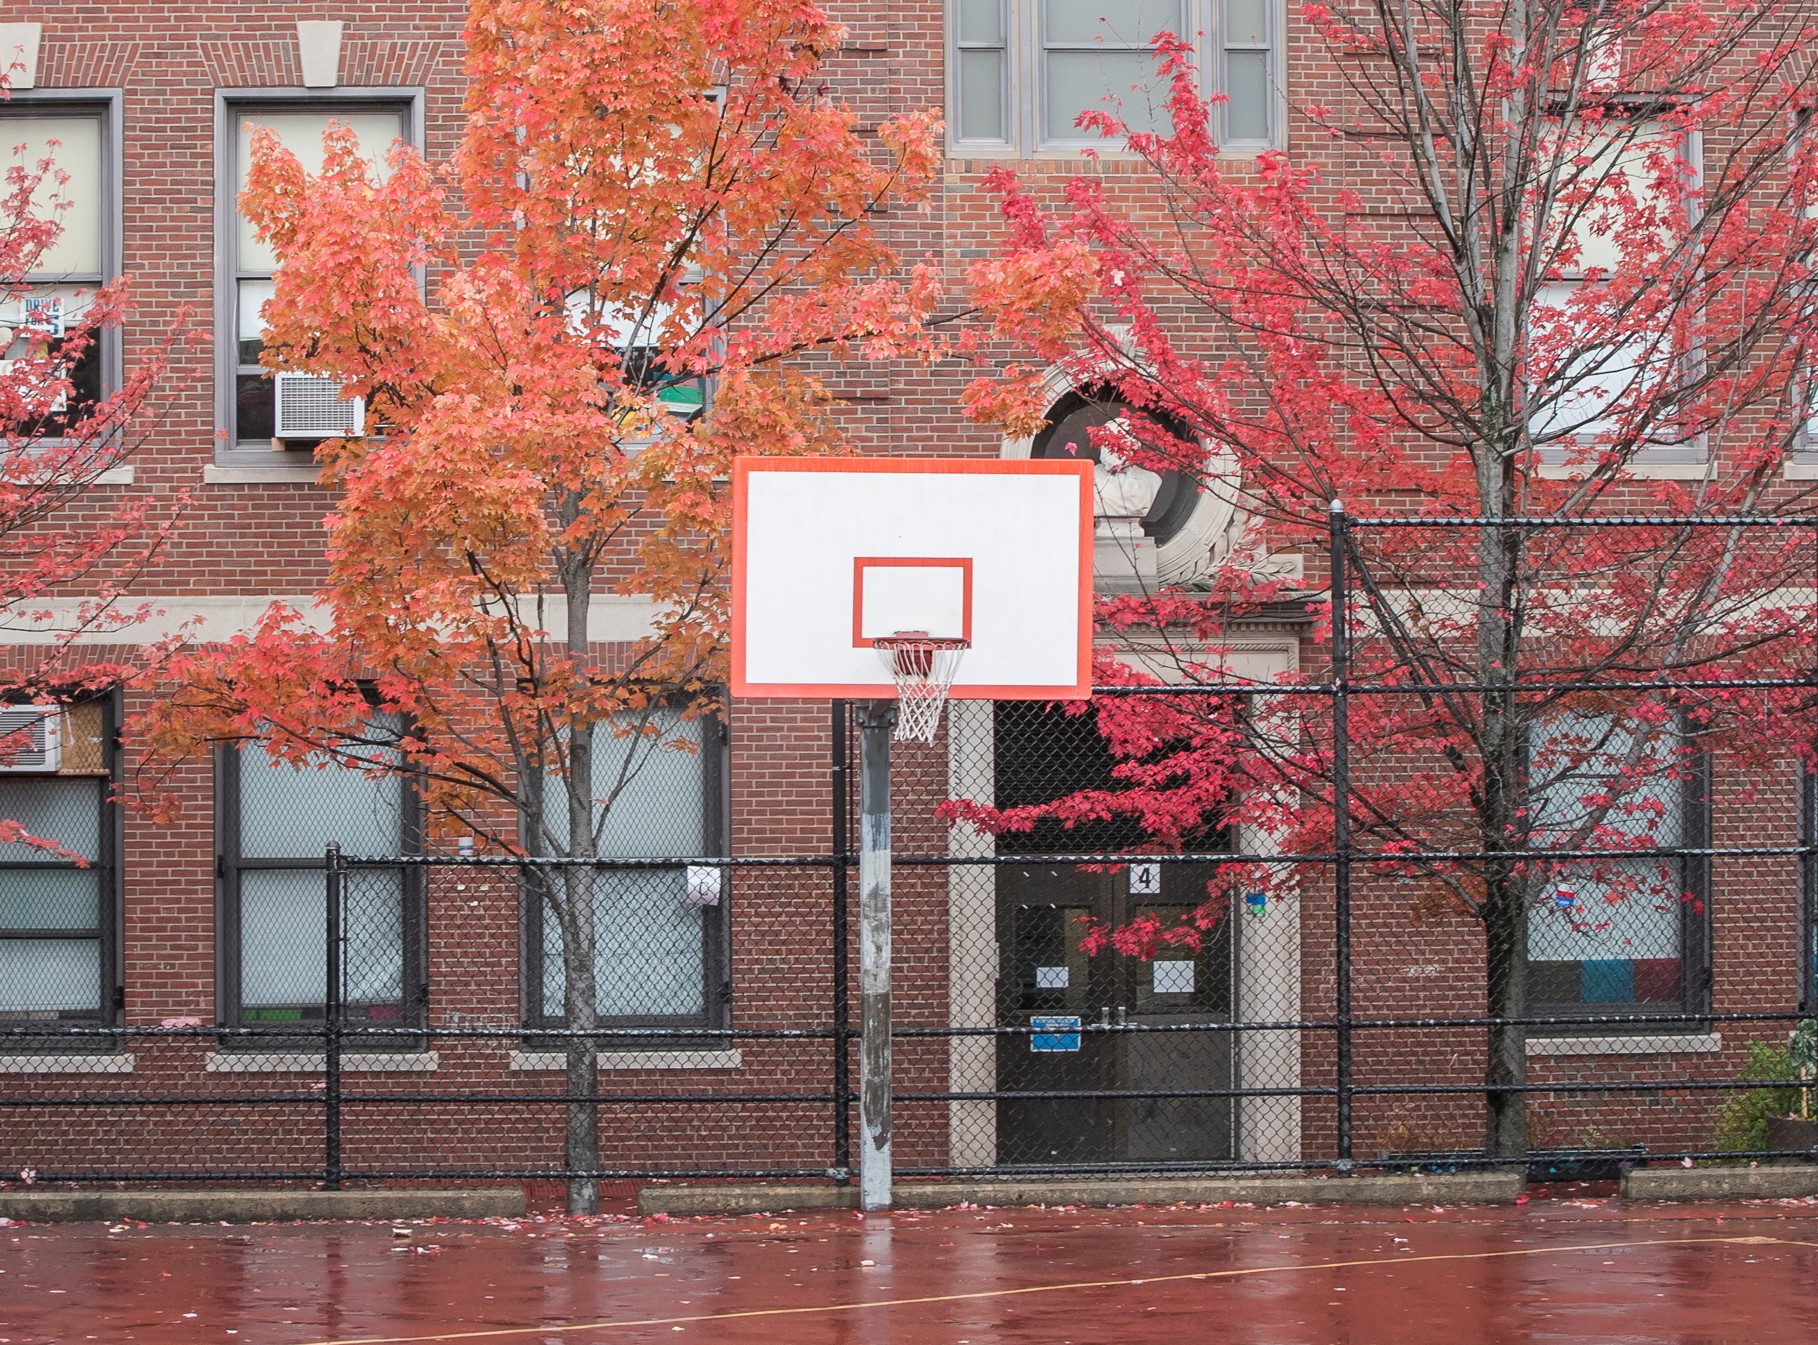 Basketball Court in Autumn